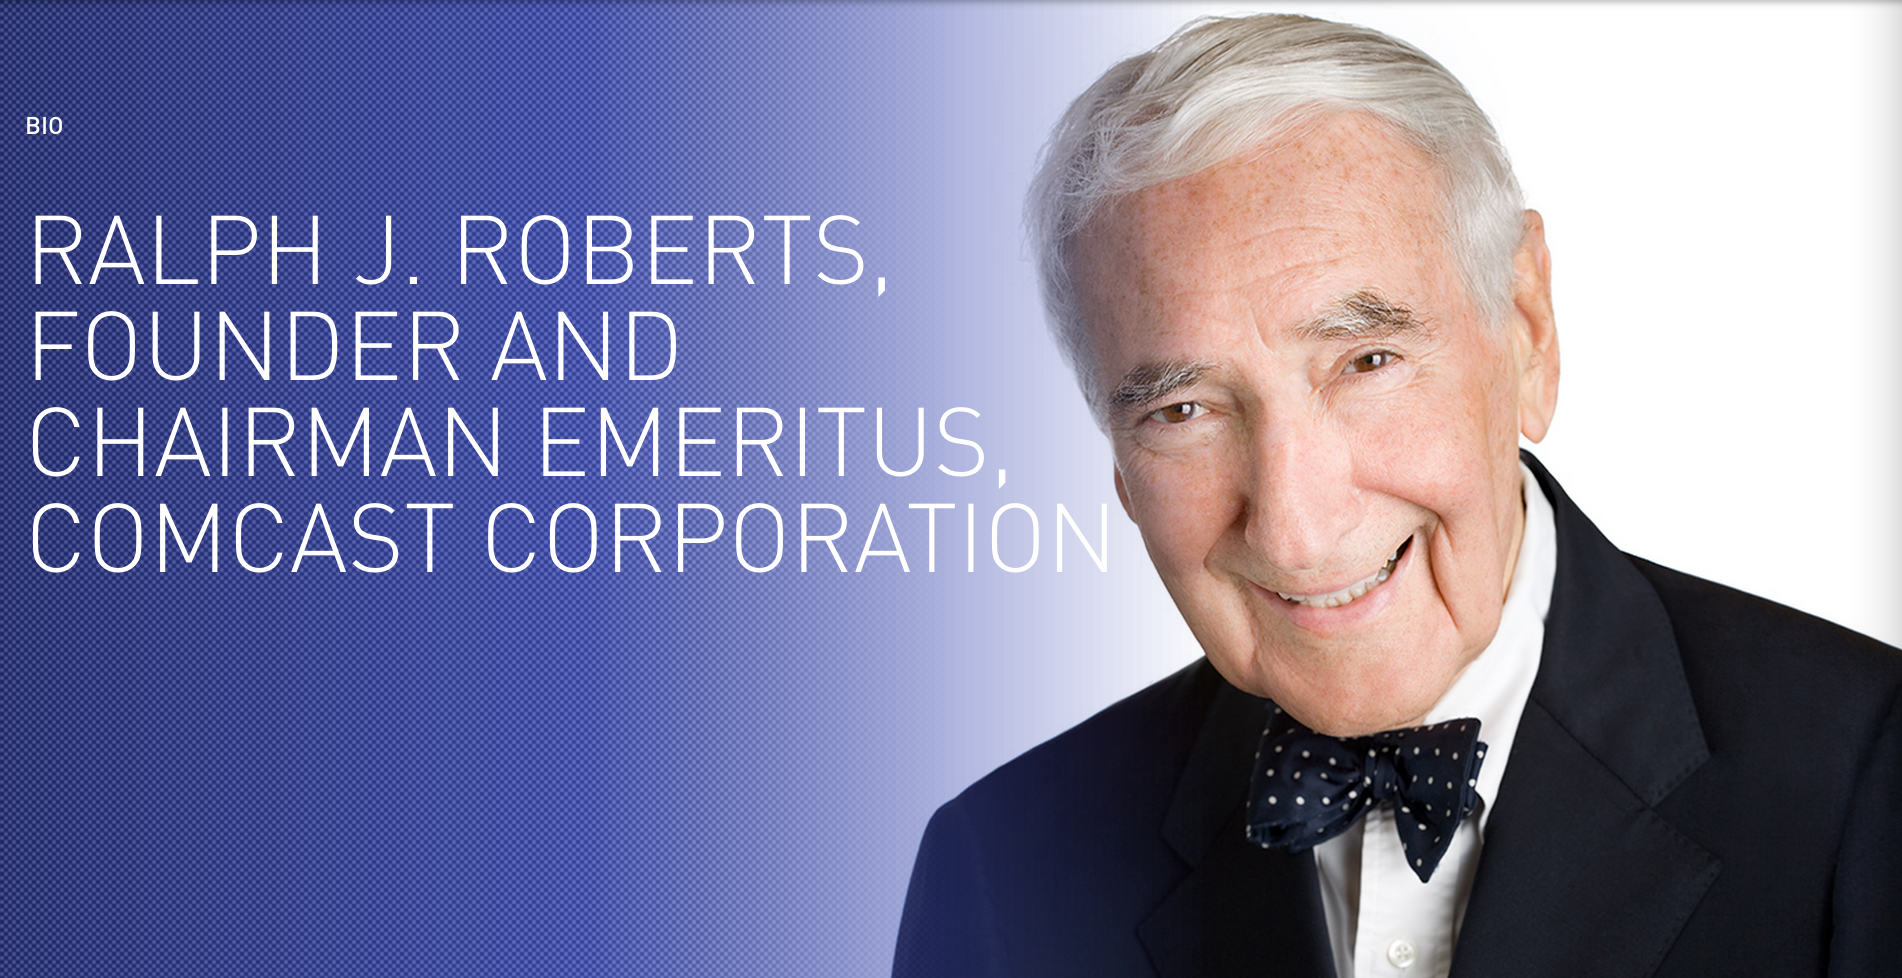 Comcast Founder Ralph Roberts Dies At 95